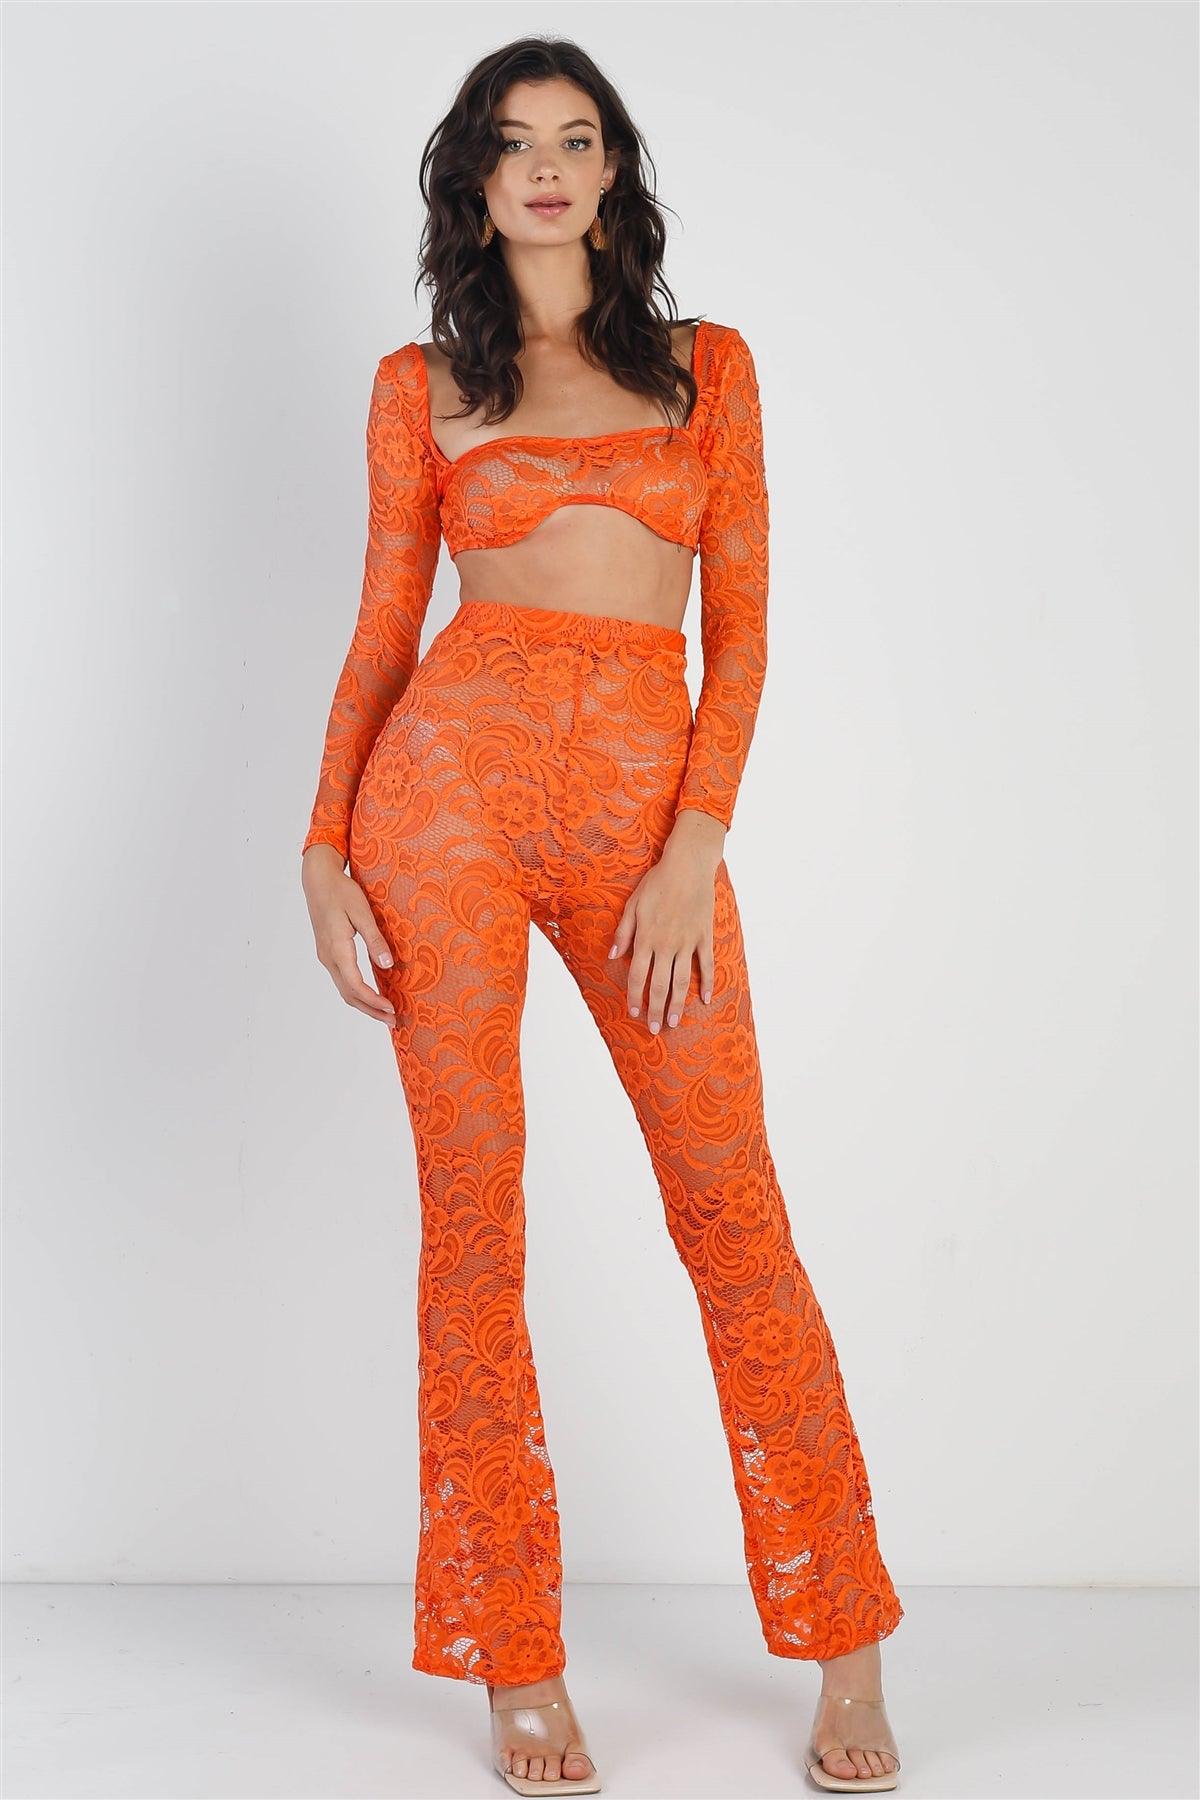 Orange Sheer Floral Lace Crop Square Neck Top & High Waist Flare Pant Set  /3-2-1